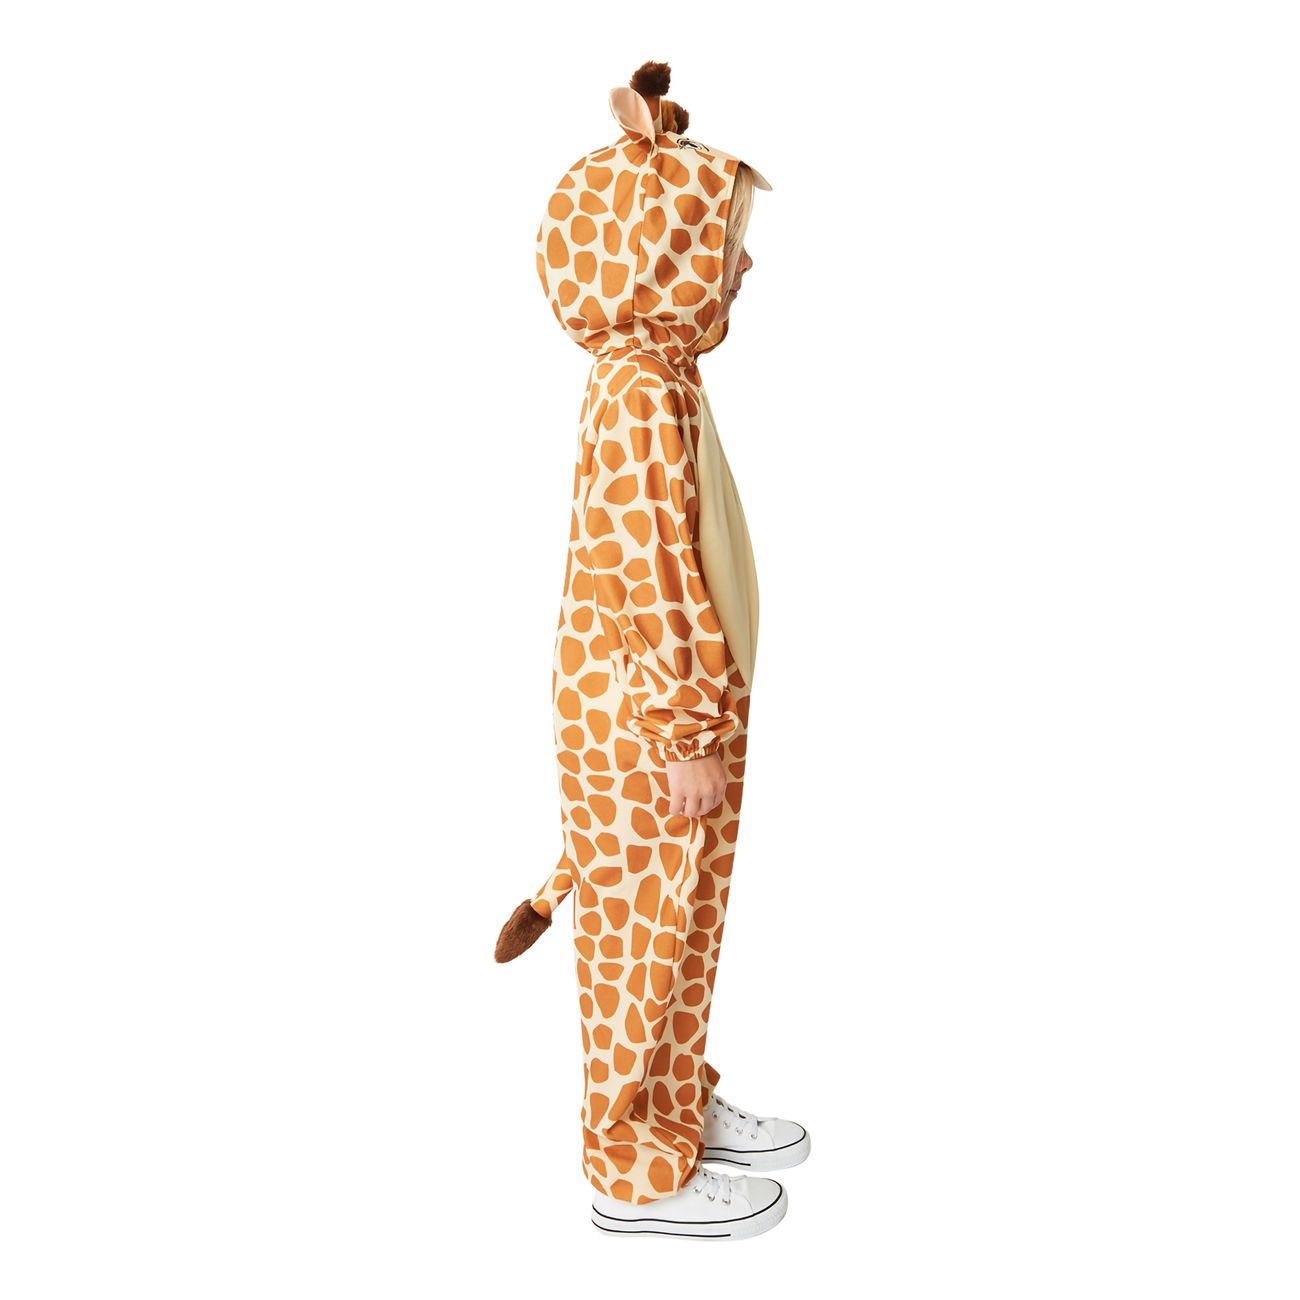 giraff-onesie-barn-maskeraddrakt-102565-3